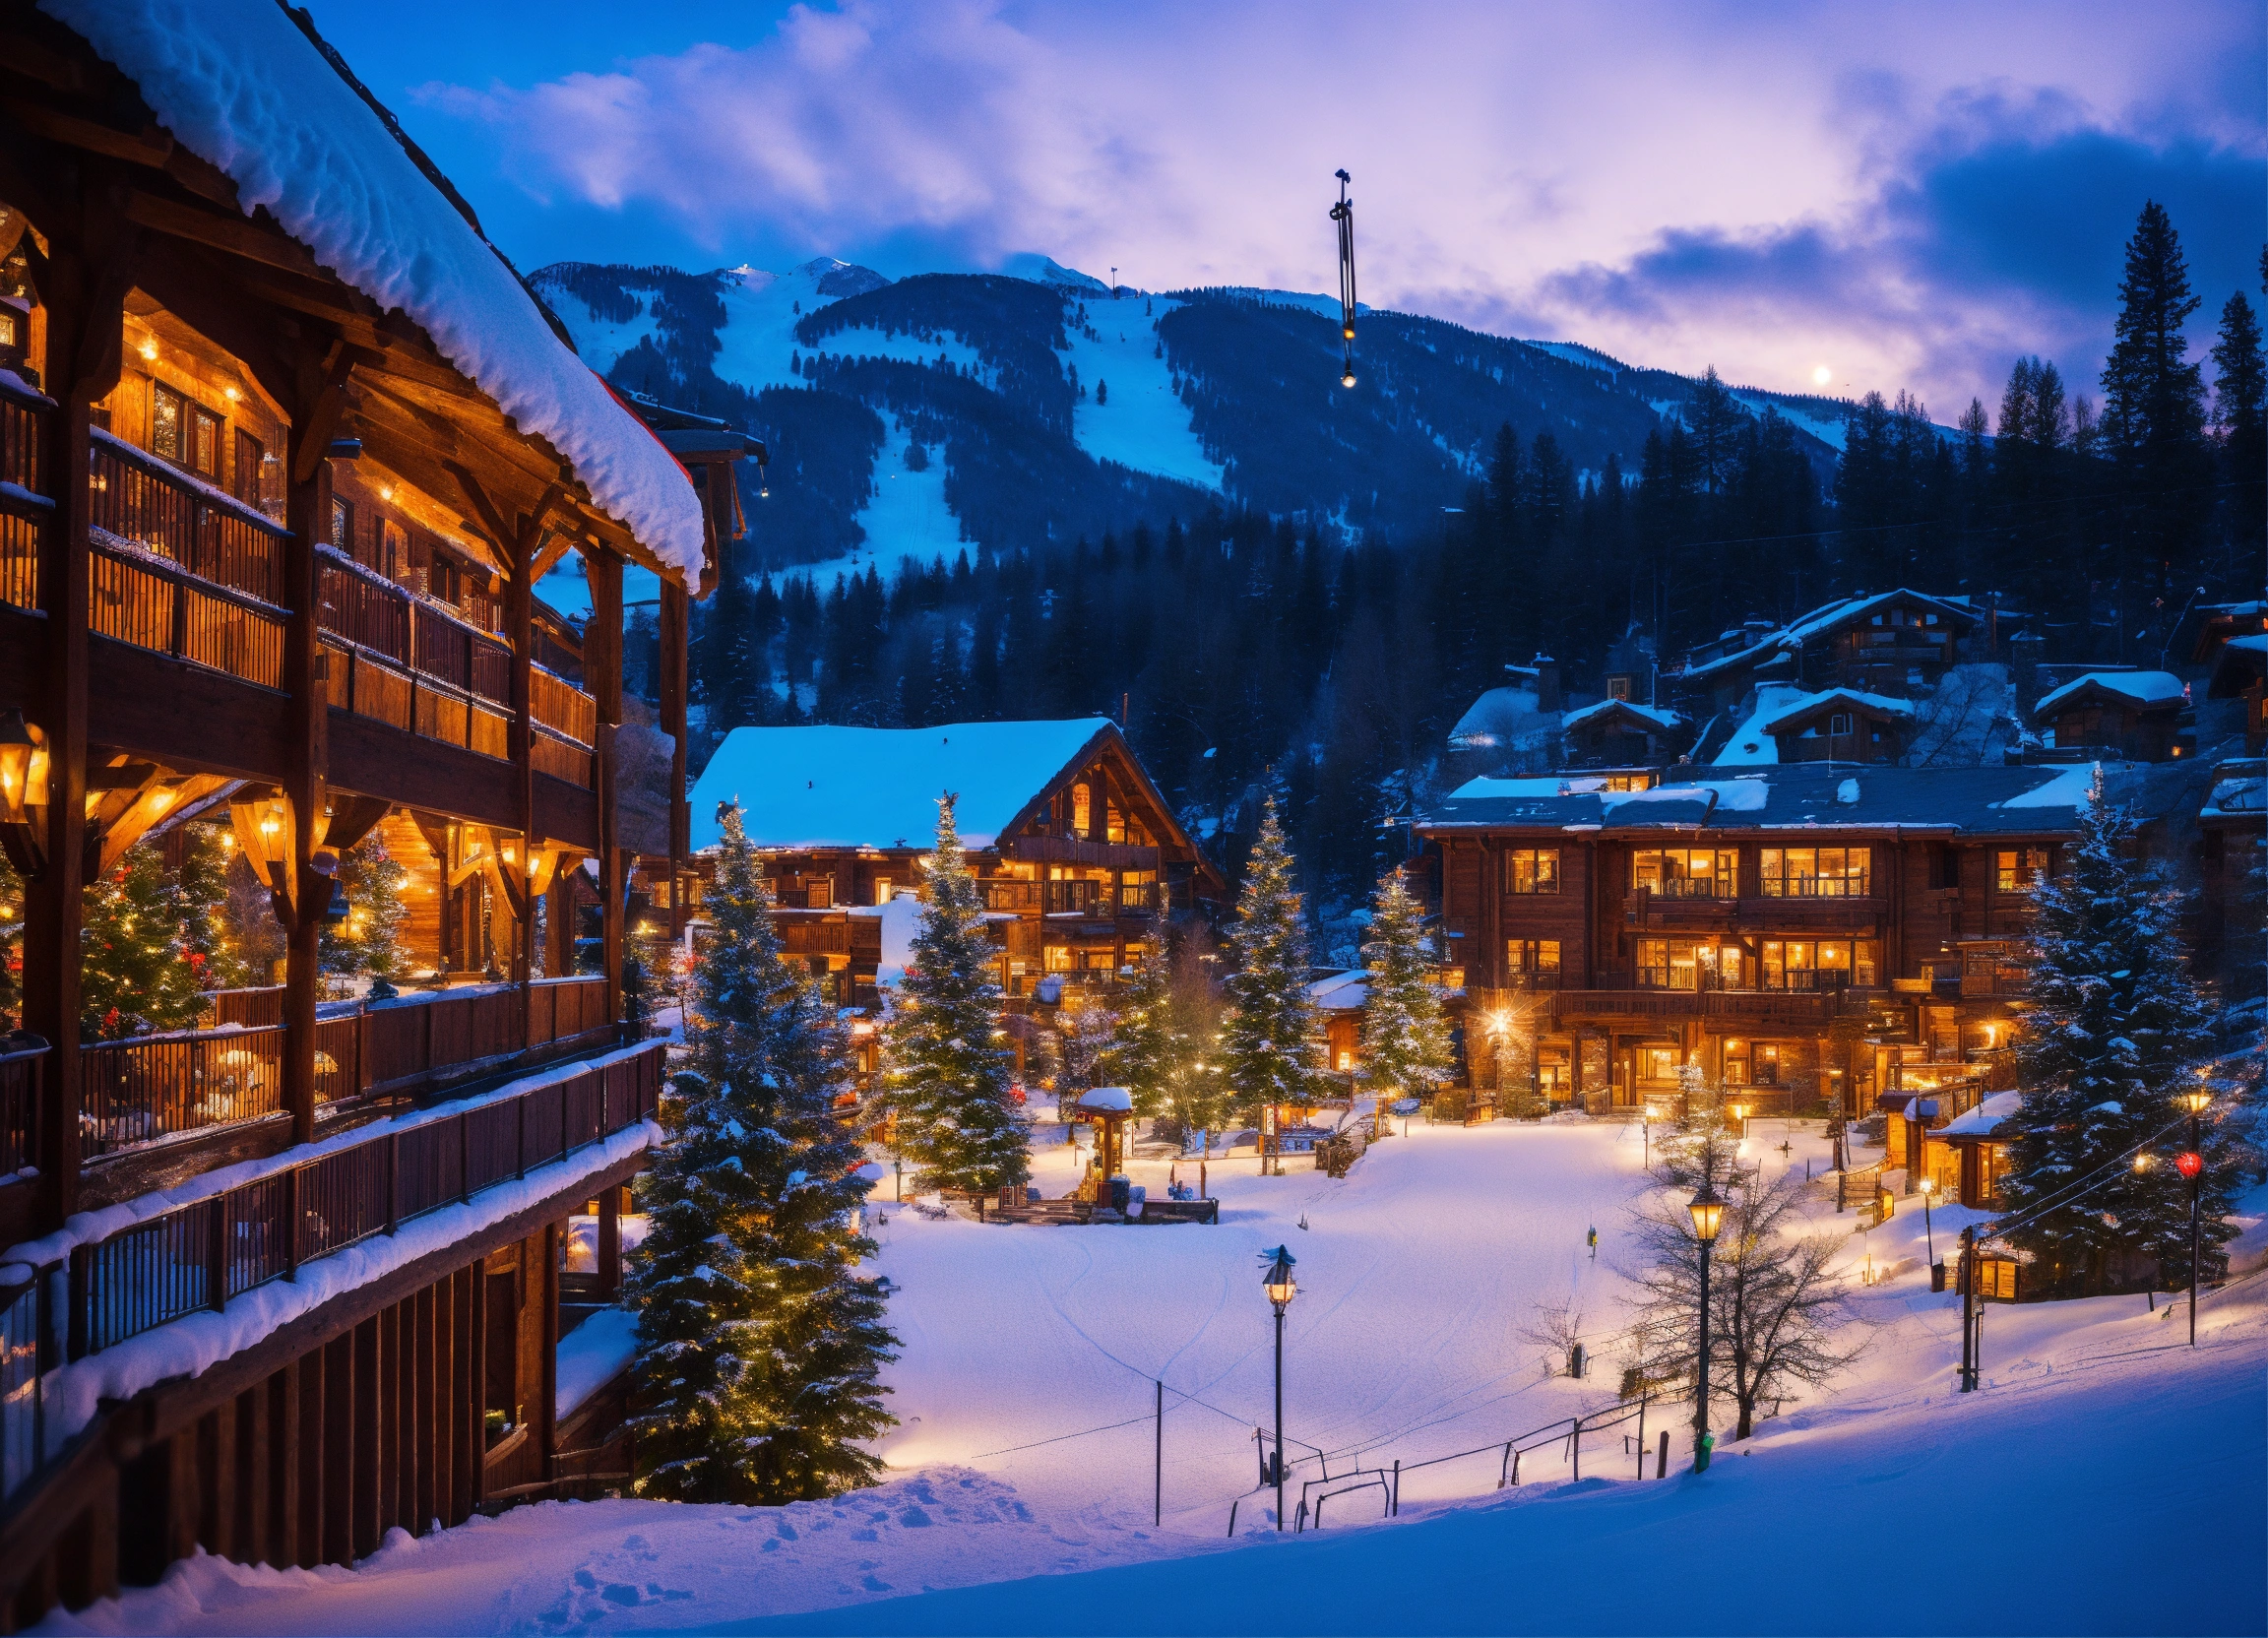 Lexica - Outdoor winter scene at a ski resort and lodge. Ski lift in ...